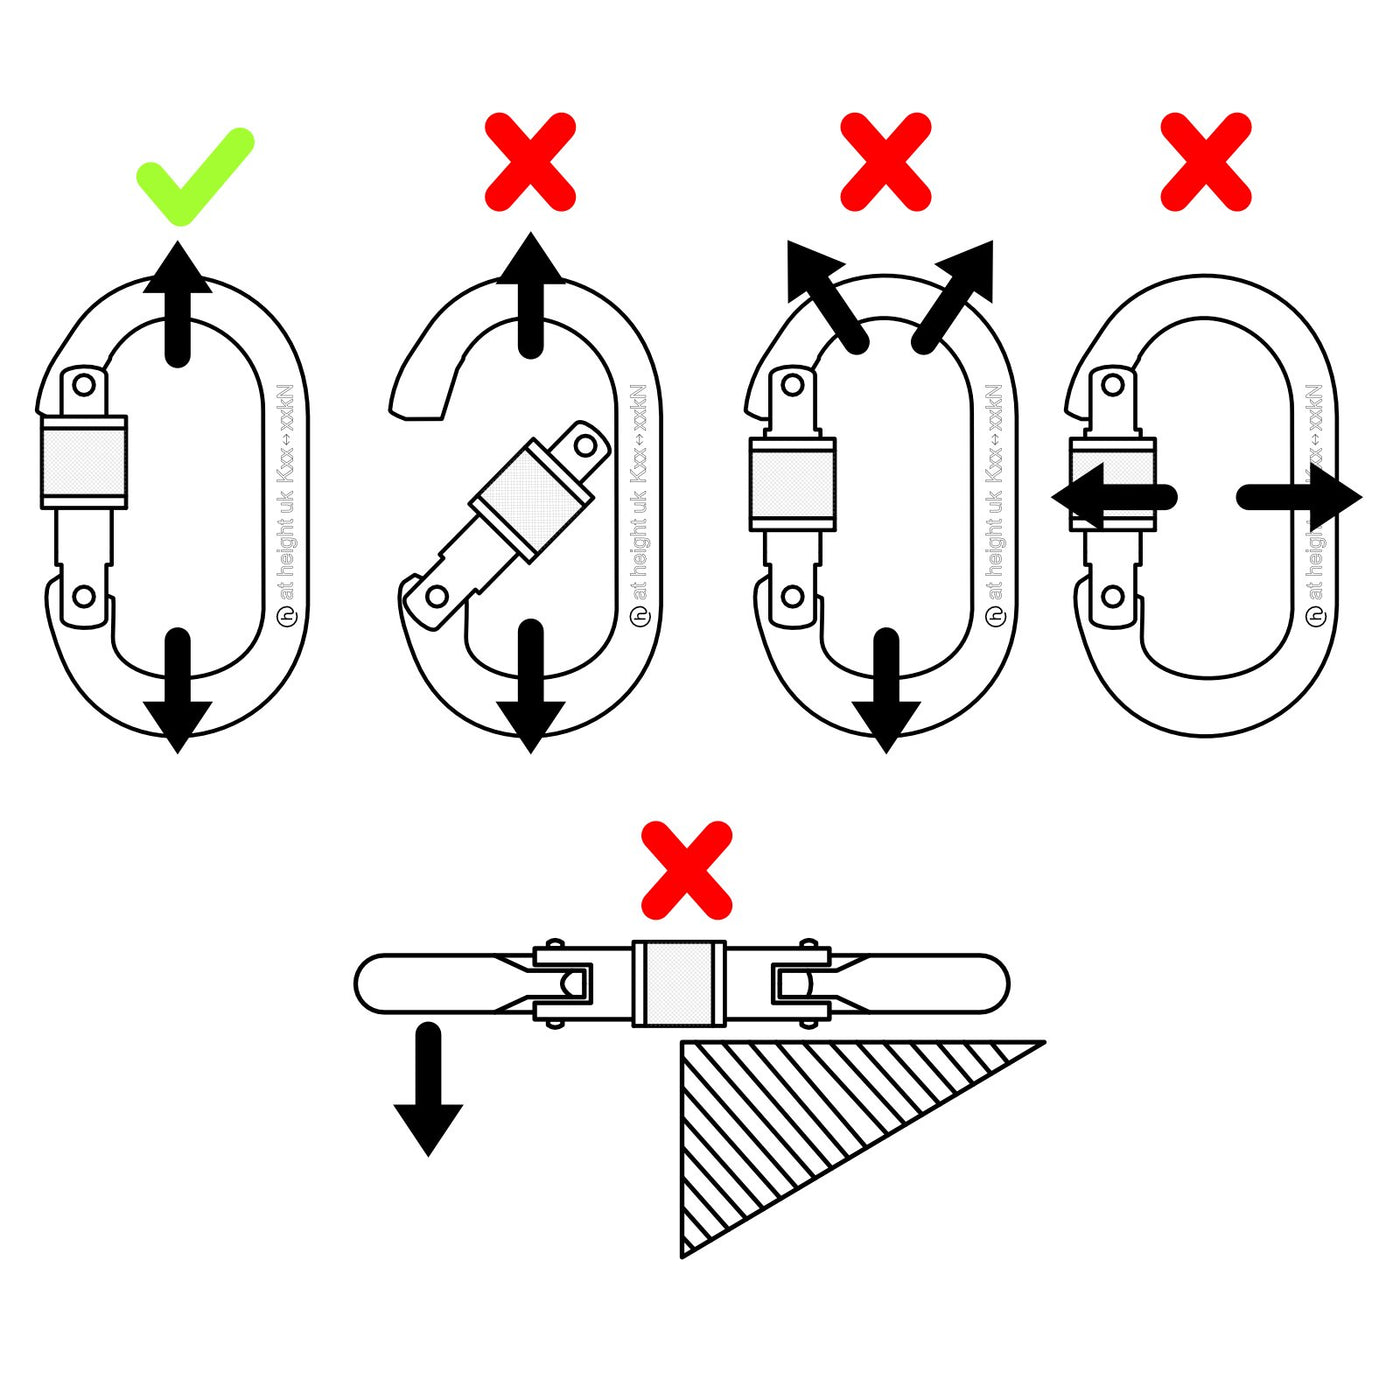 instruction manual Steel oval locking carabiners PCA-1276, PCA-1702, PCA-1703